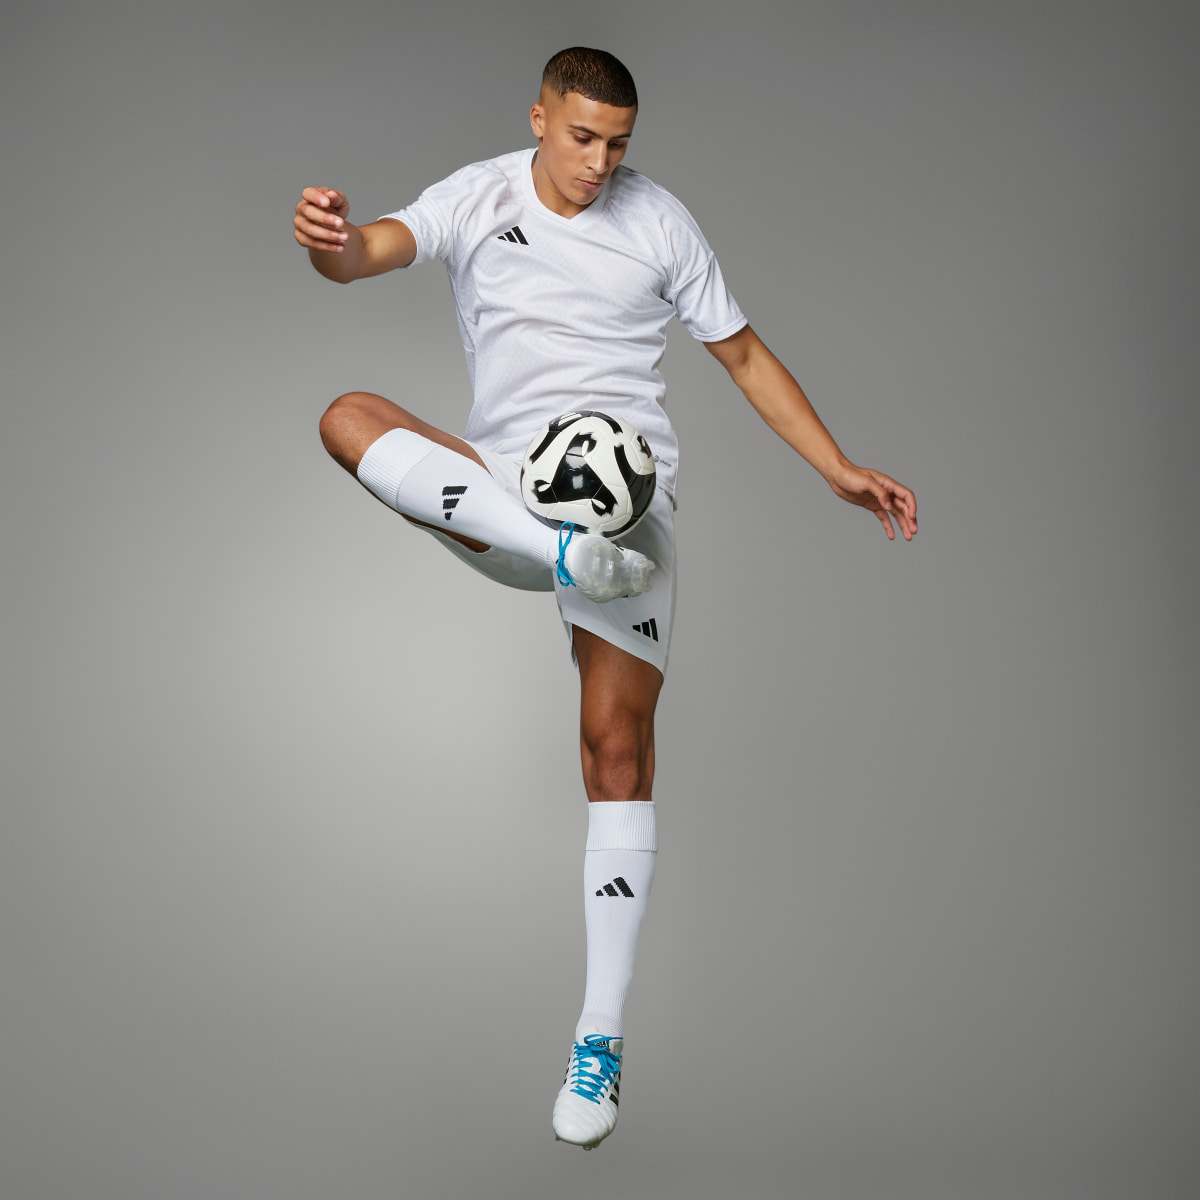 Adidas Botas de Futebol 11Pro Toni Kroos – Piso firme. 7